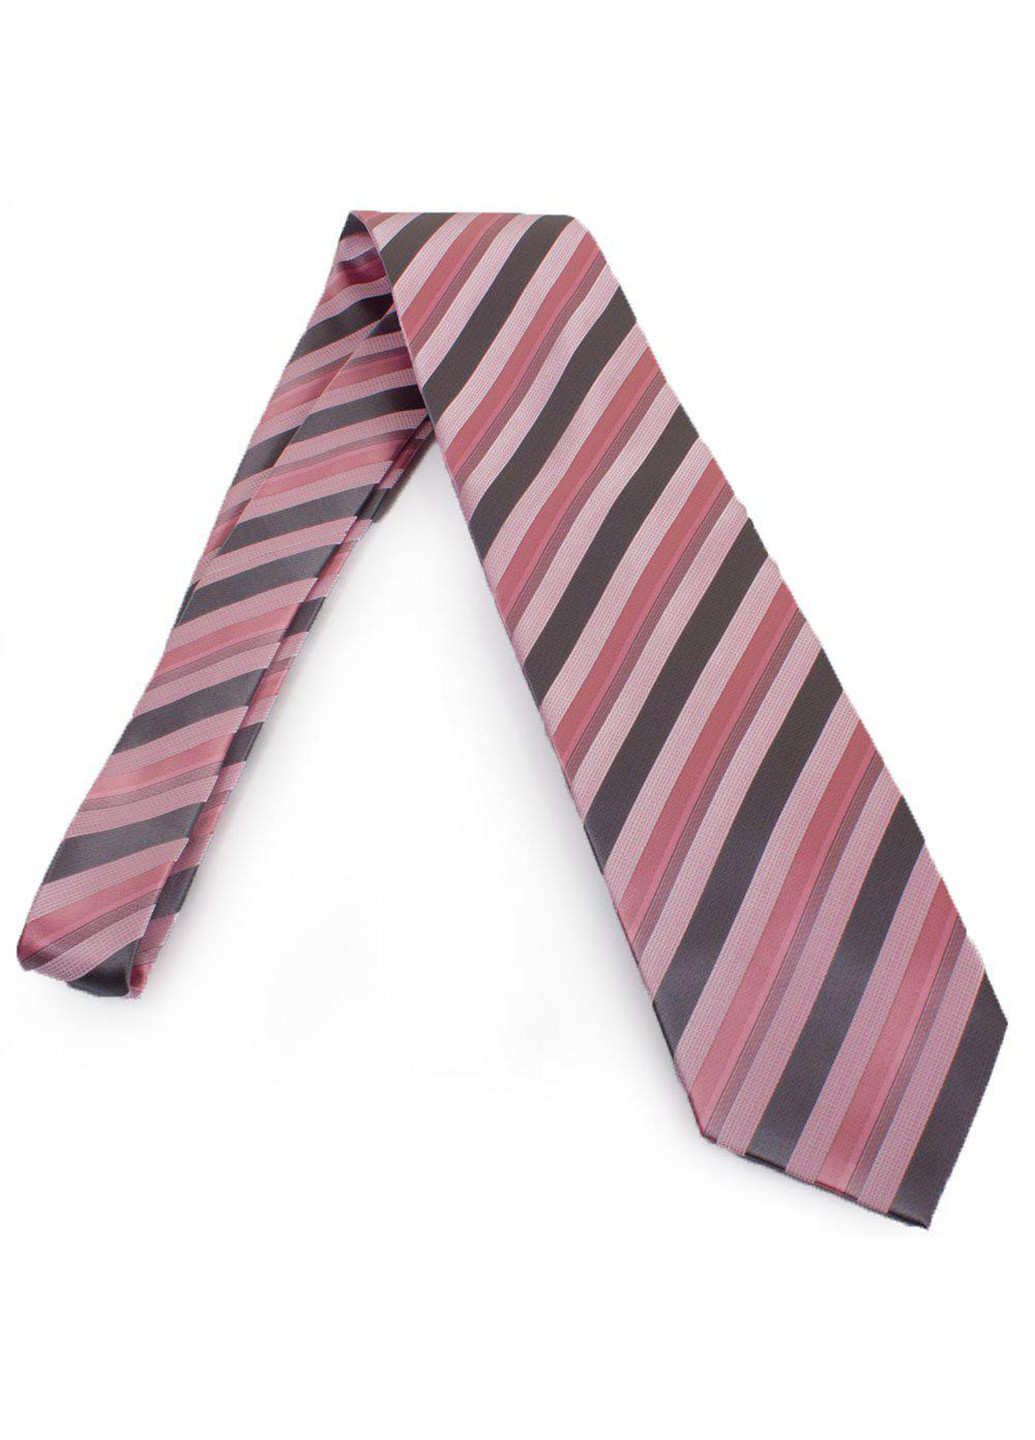 Мужской галстук 147 см Schonau & Houcken (252127495)